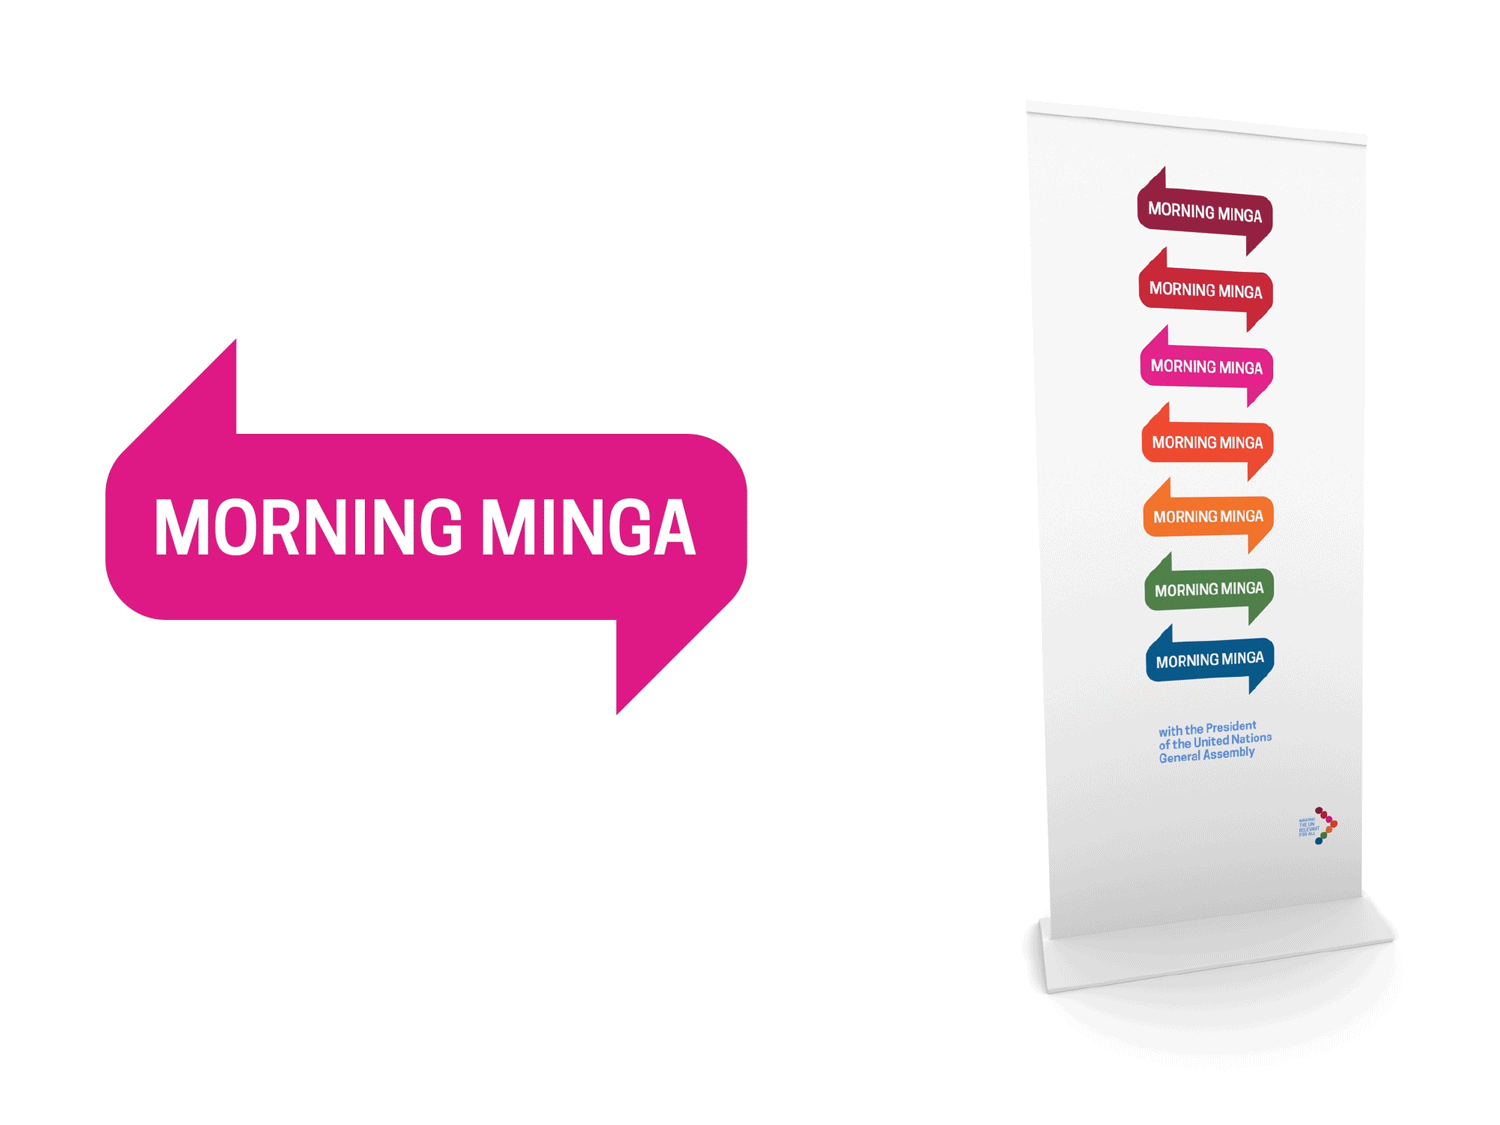 Morning Minga materials for UNPGA73